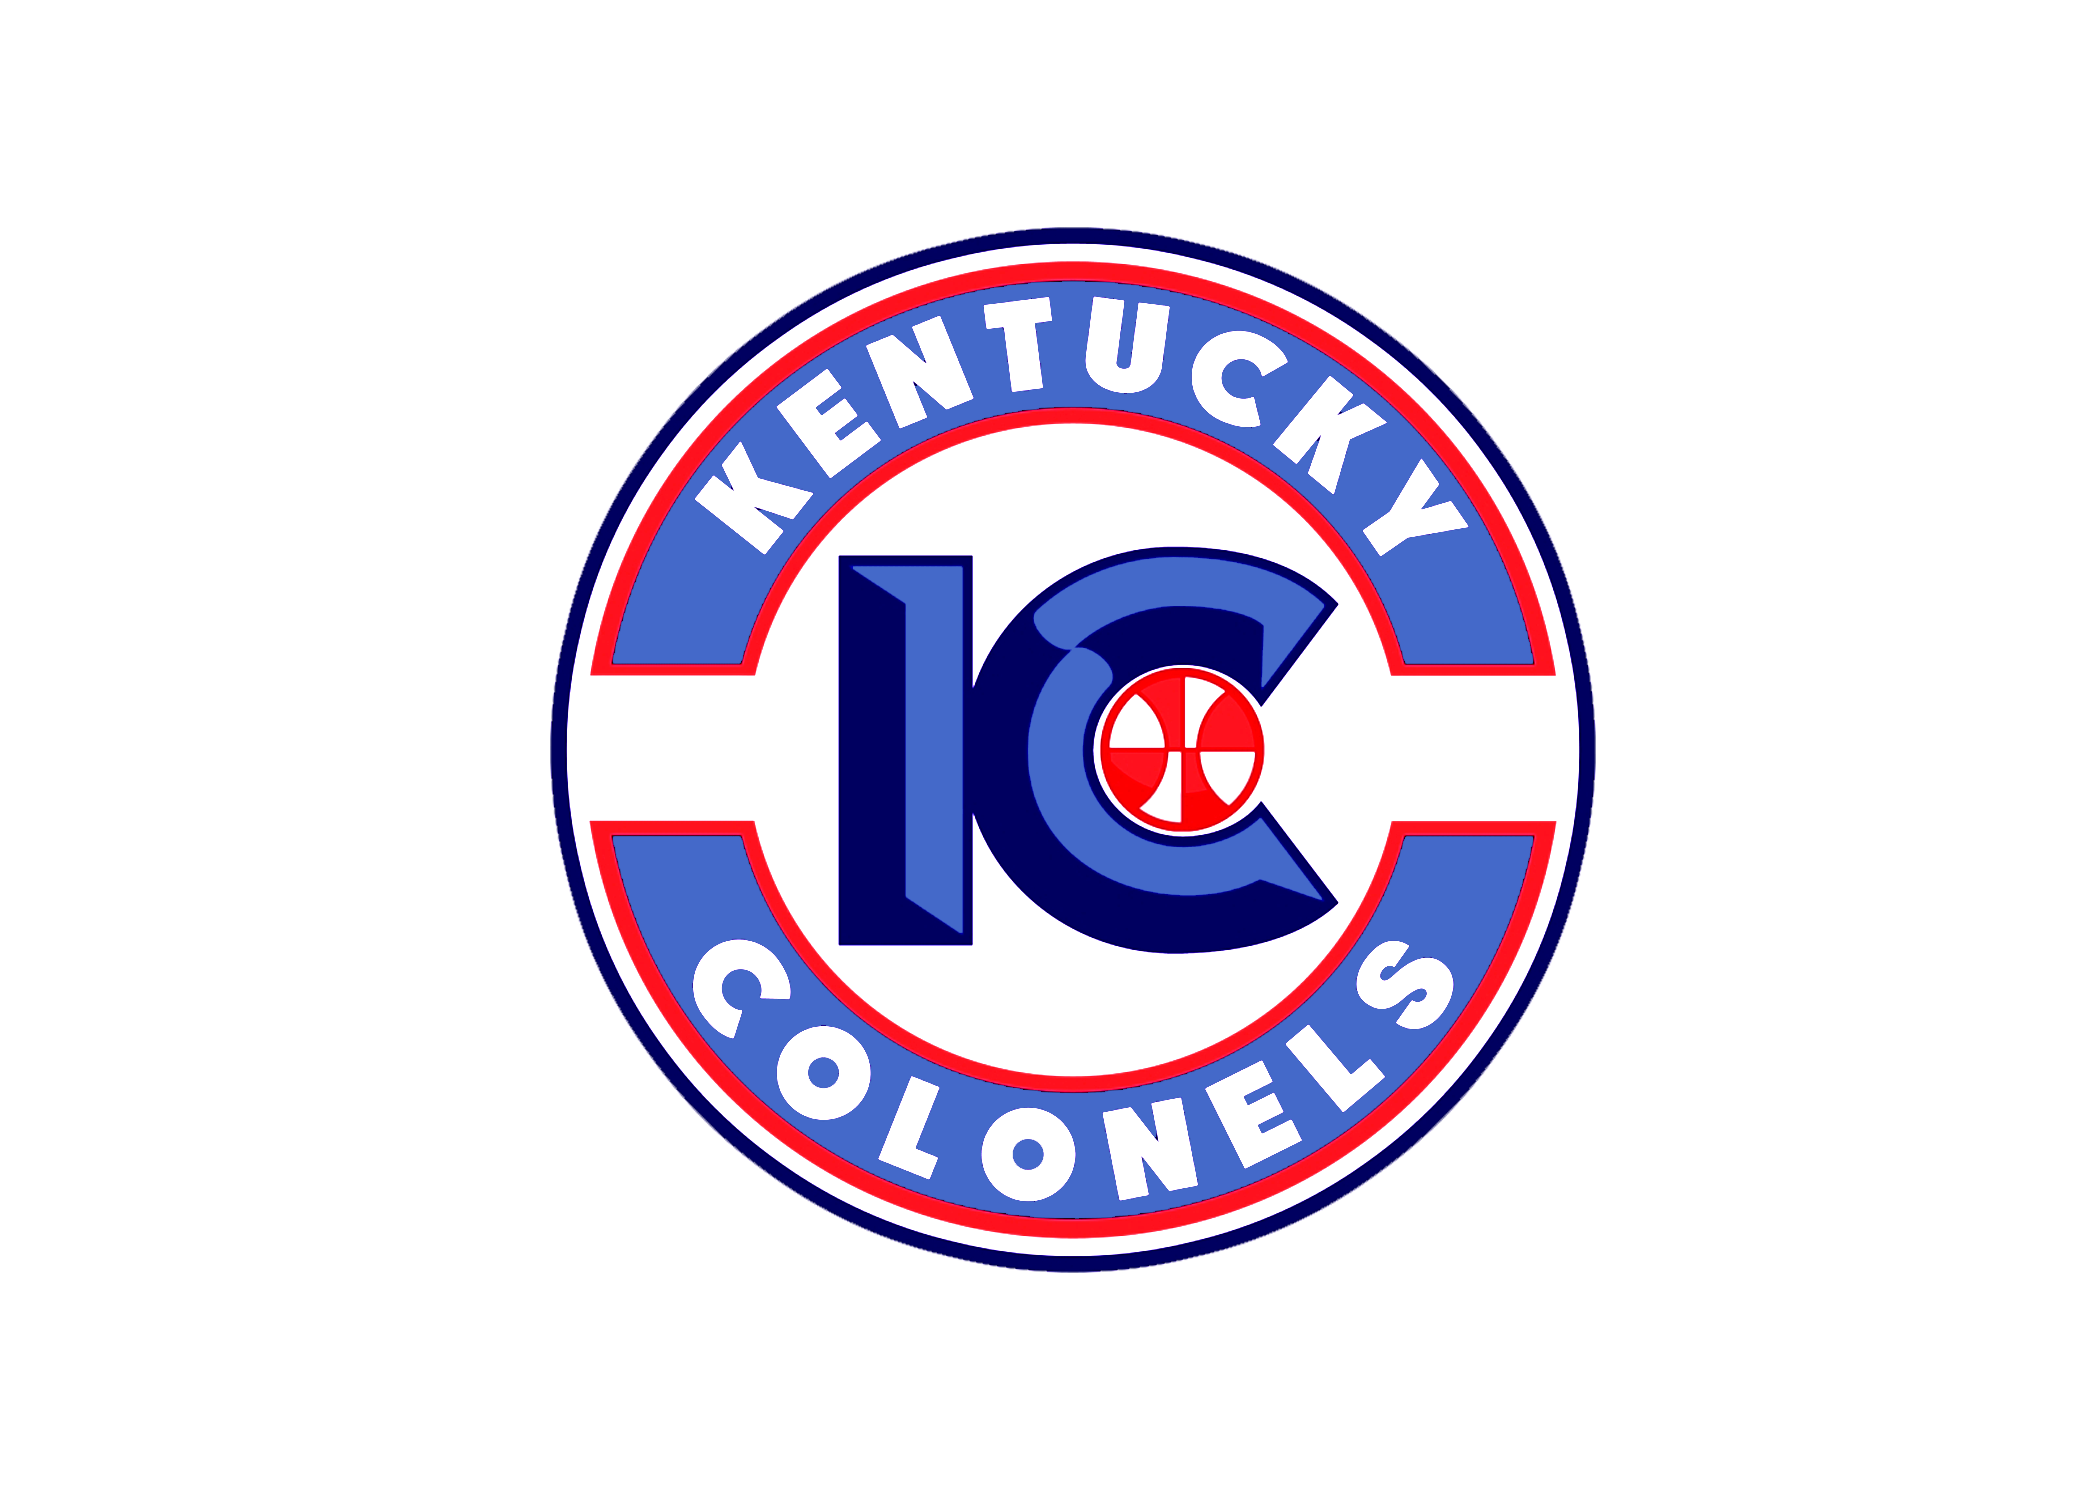 Louisville Cardinals 20'' x Retro Logo Circle Sign